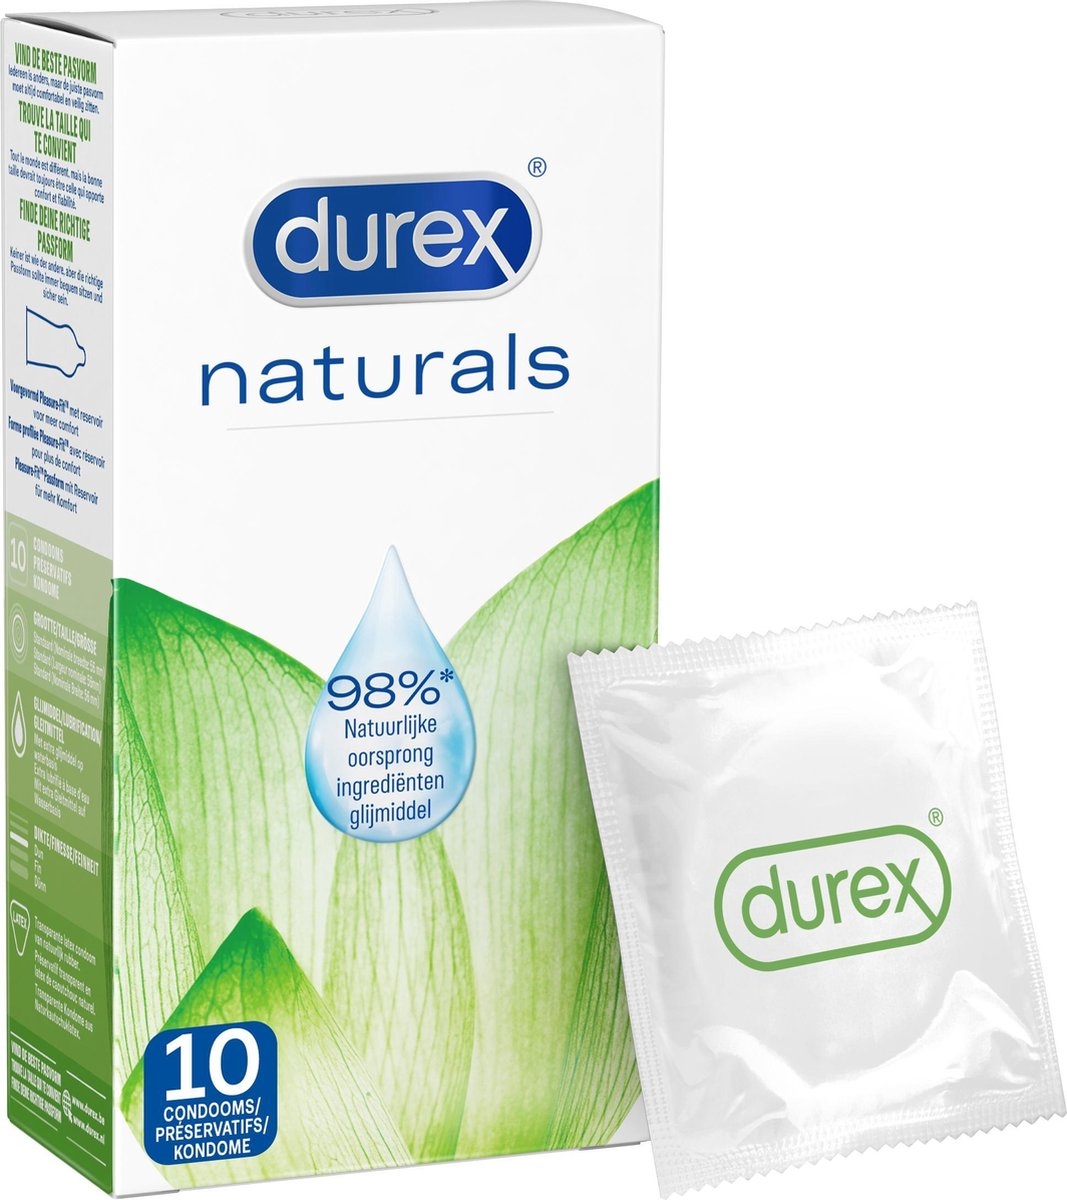 Durex Naturals condooms